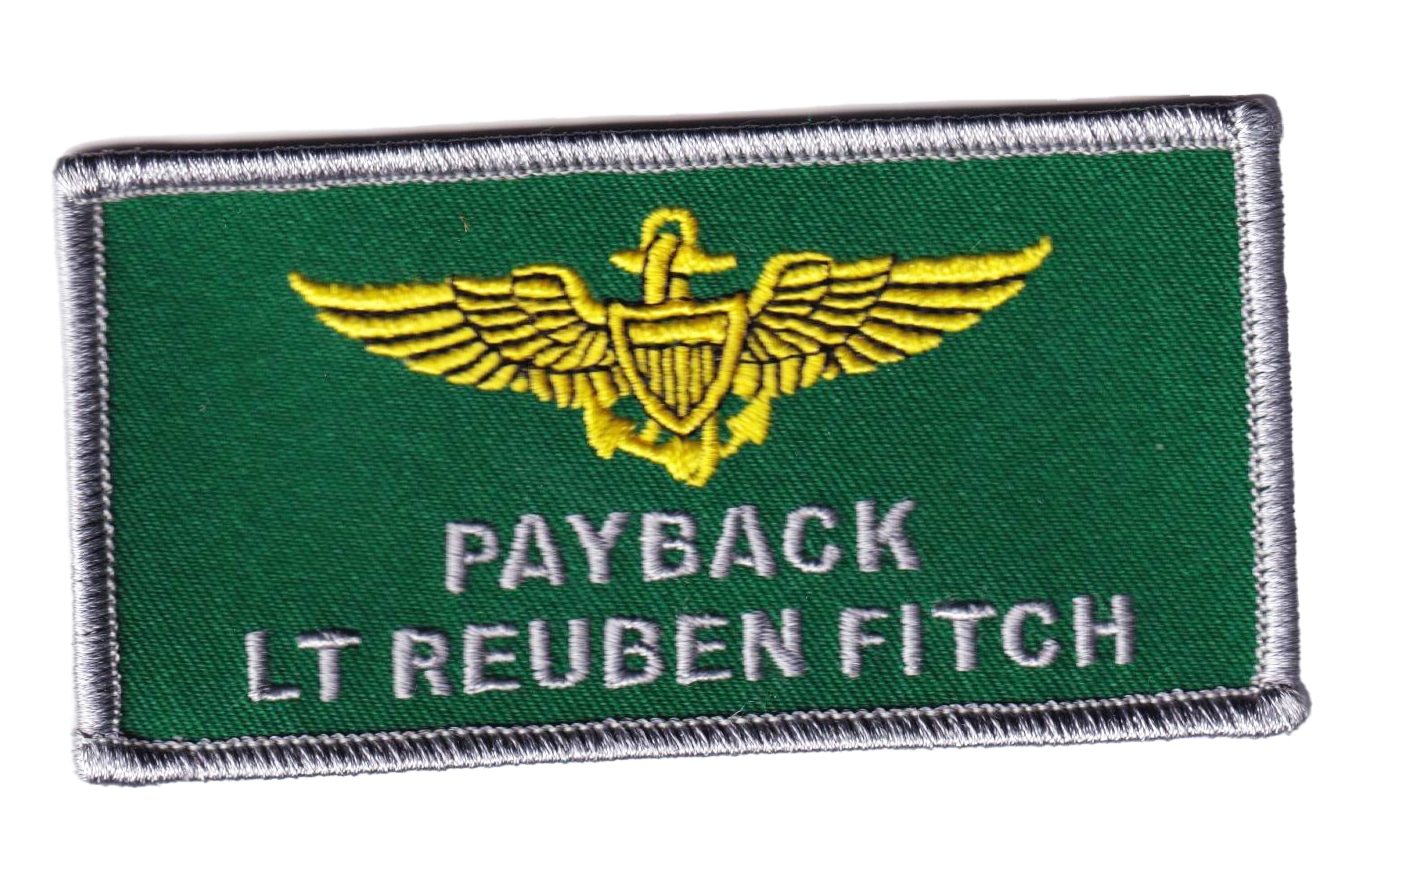 LT Reuben Payback Fitch from Maverick